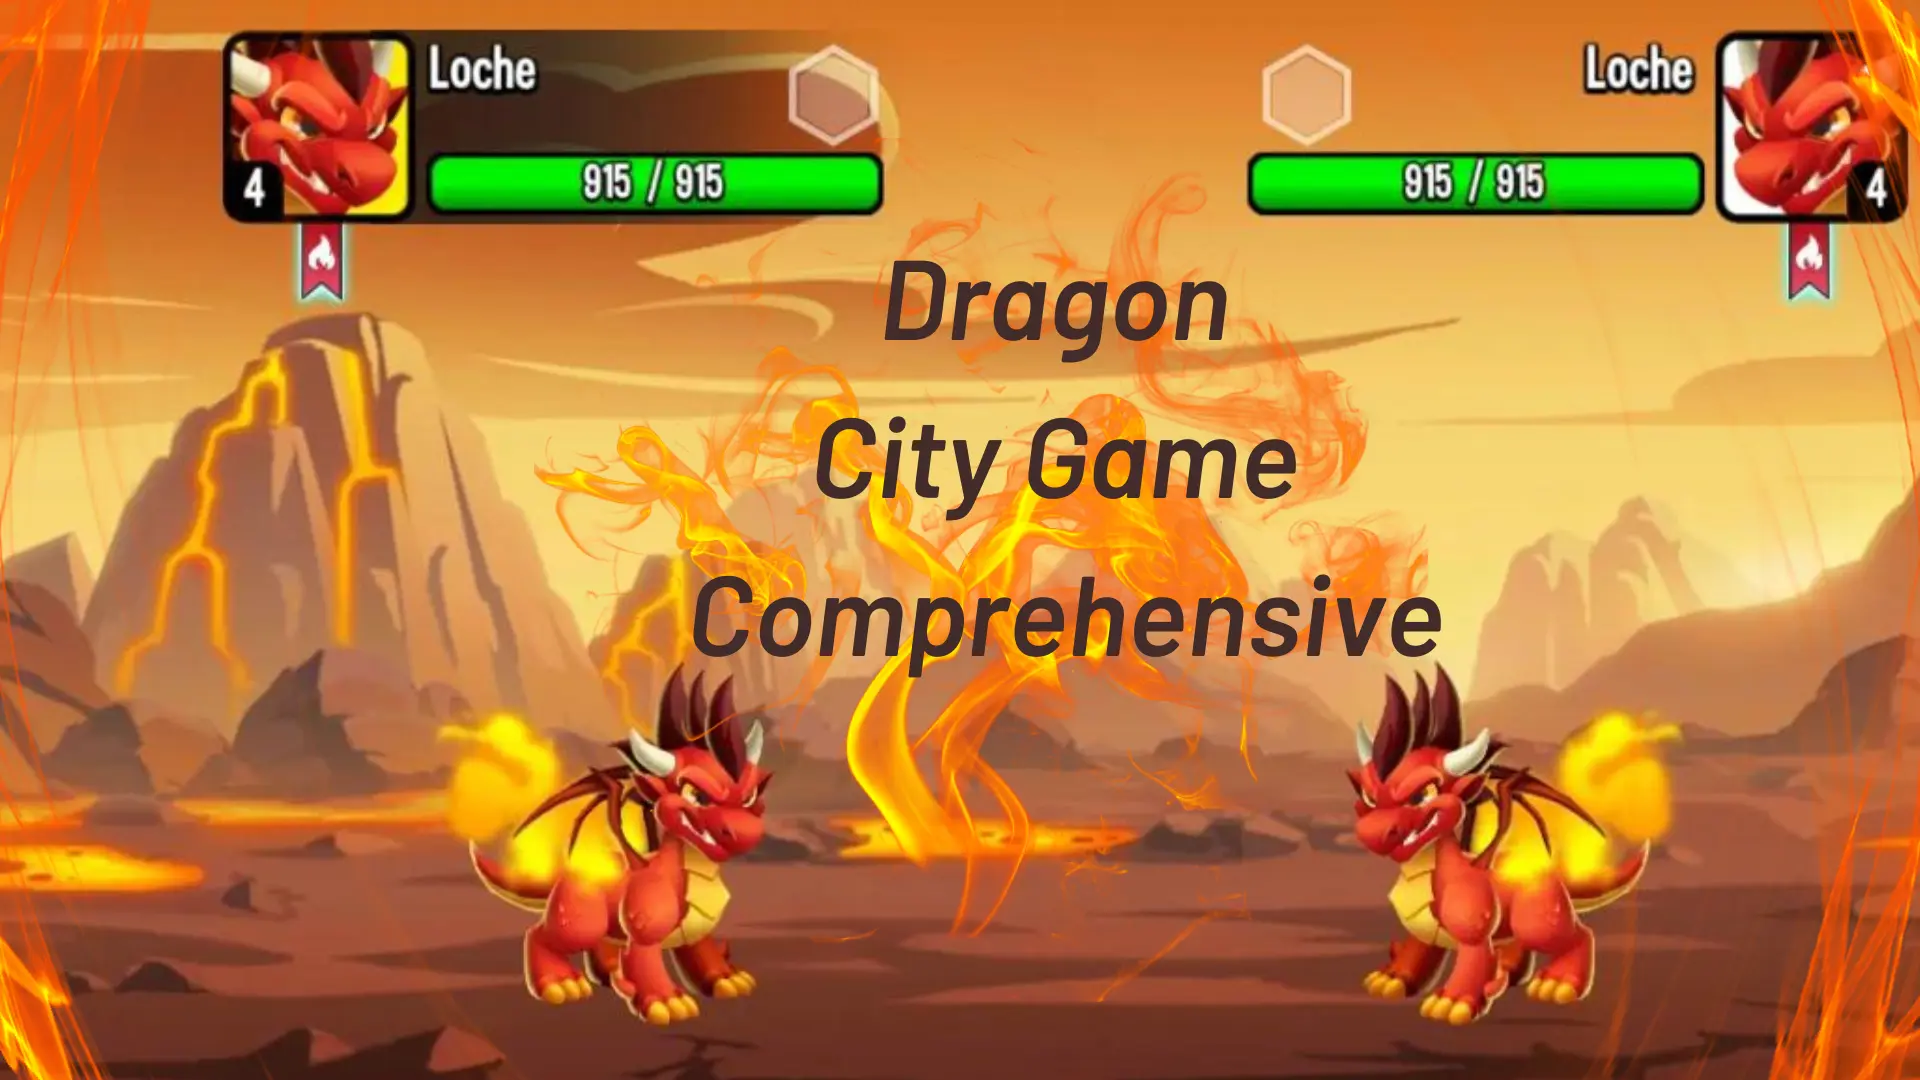 Dragon City Game Comprehensive